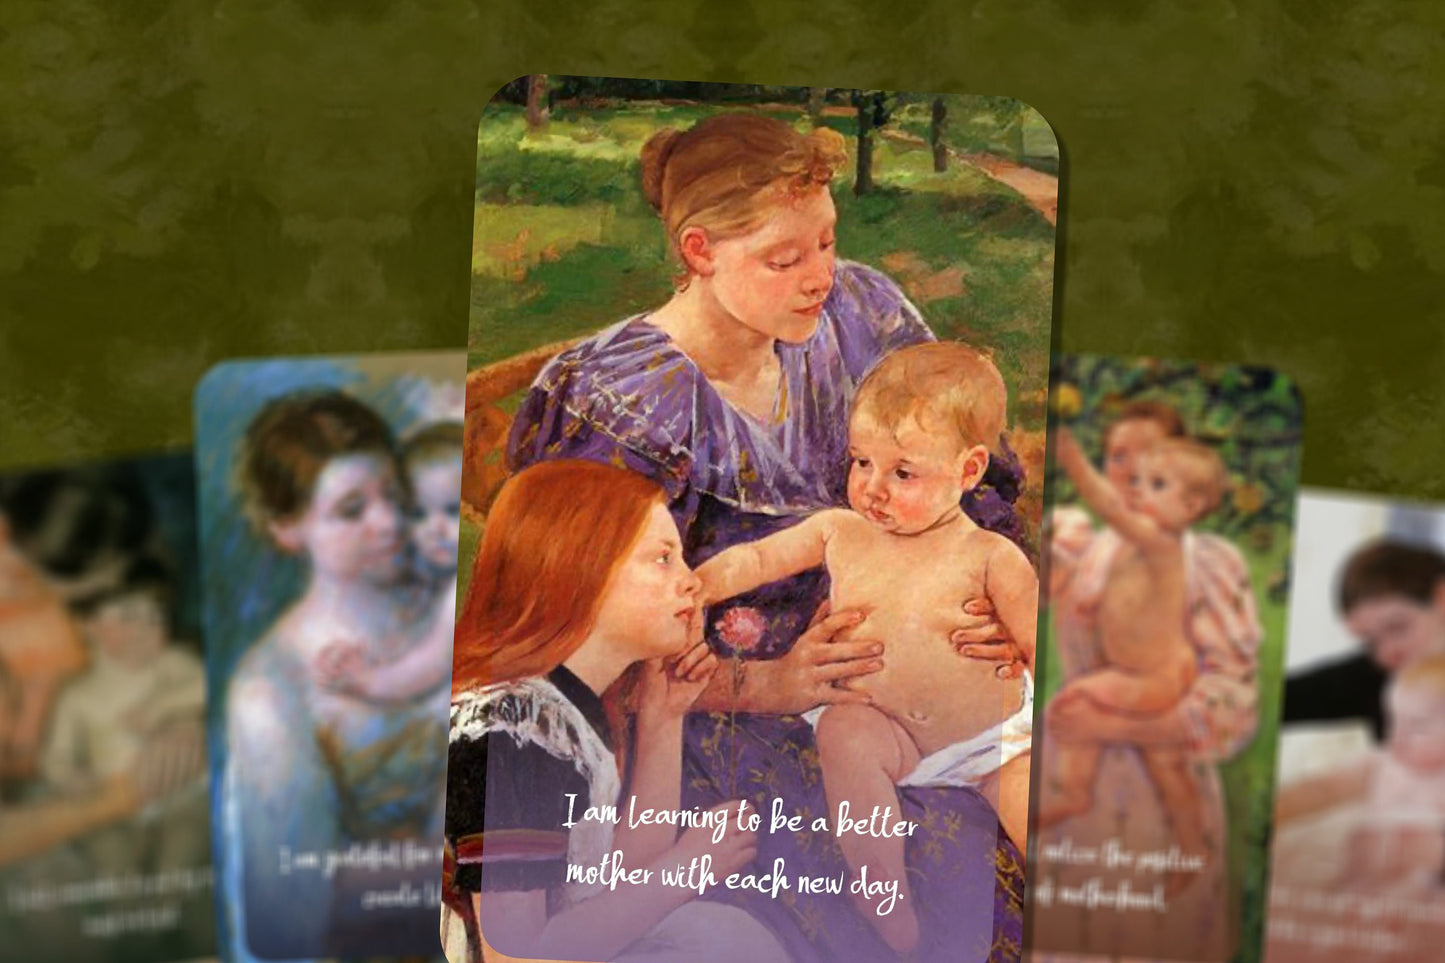 Positive Affirmations for Moms - Wisdom Cards for Moms